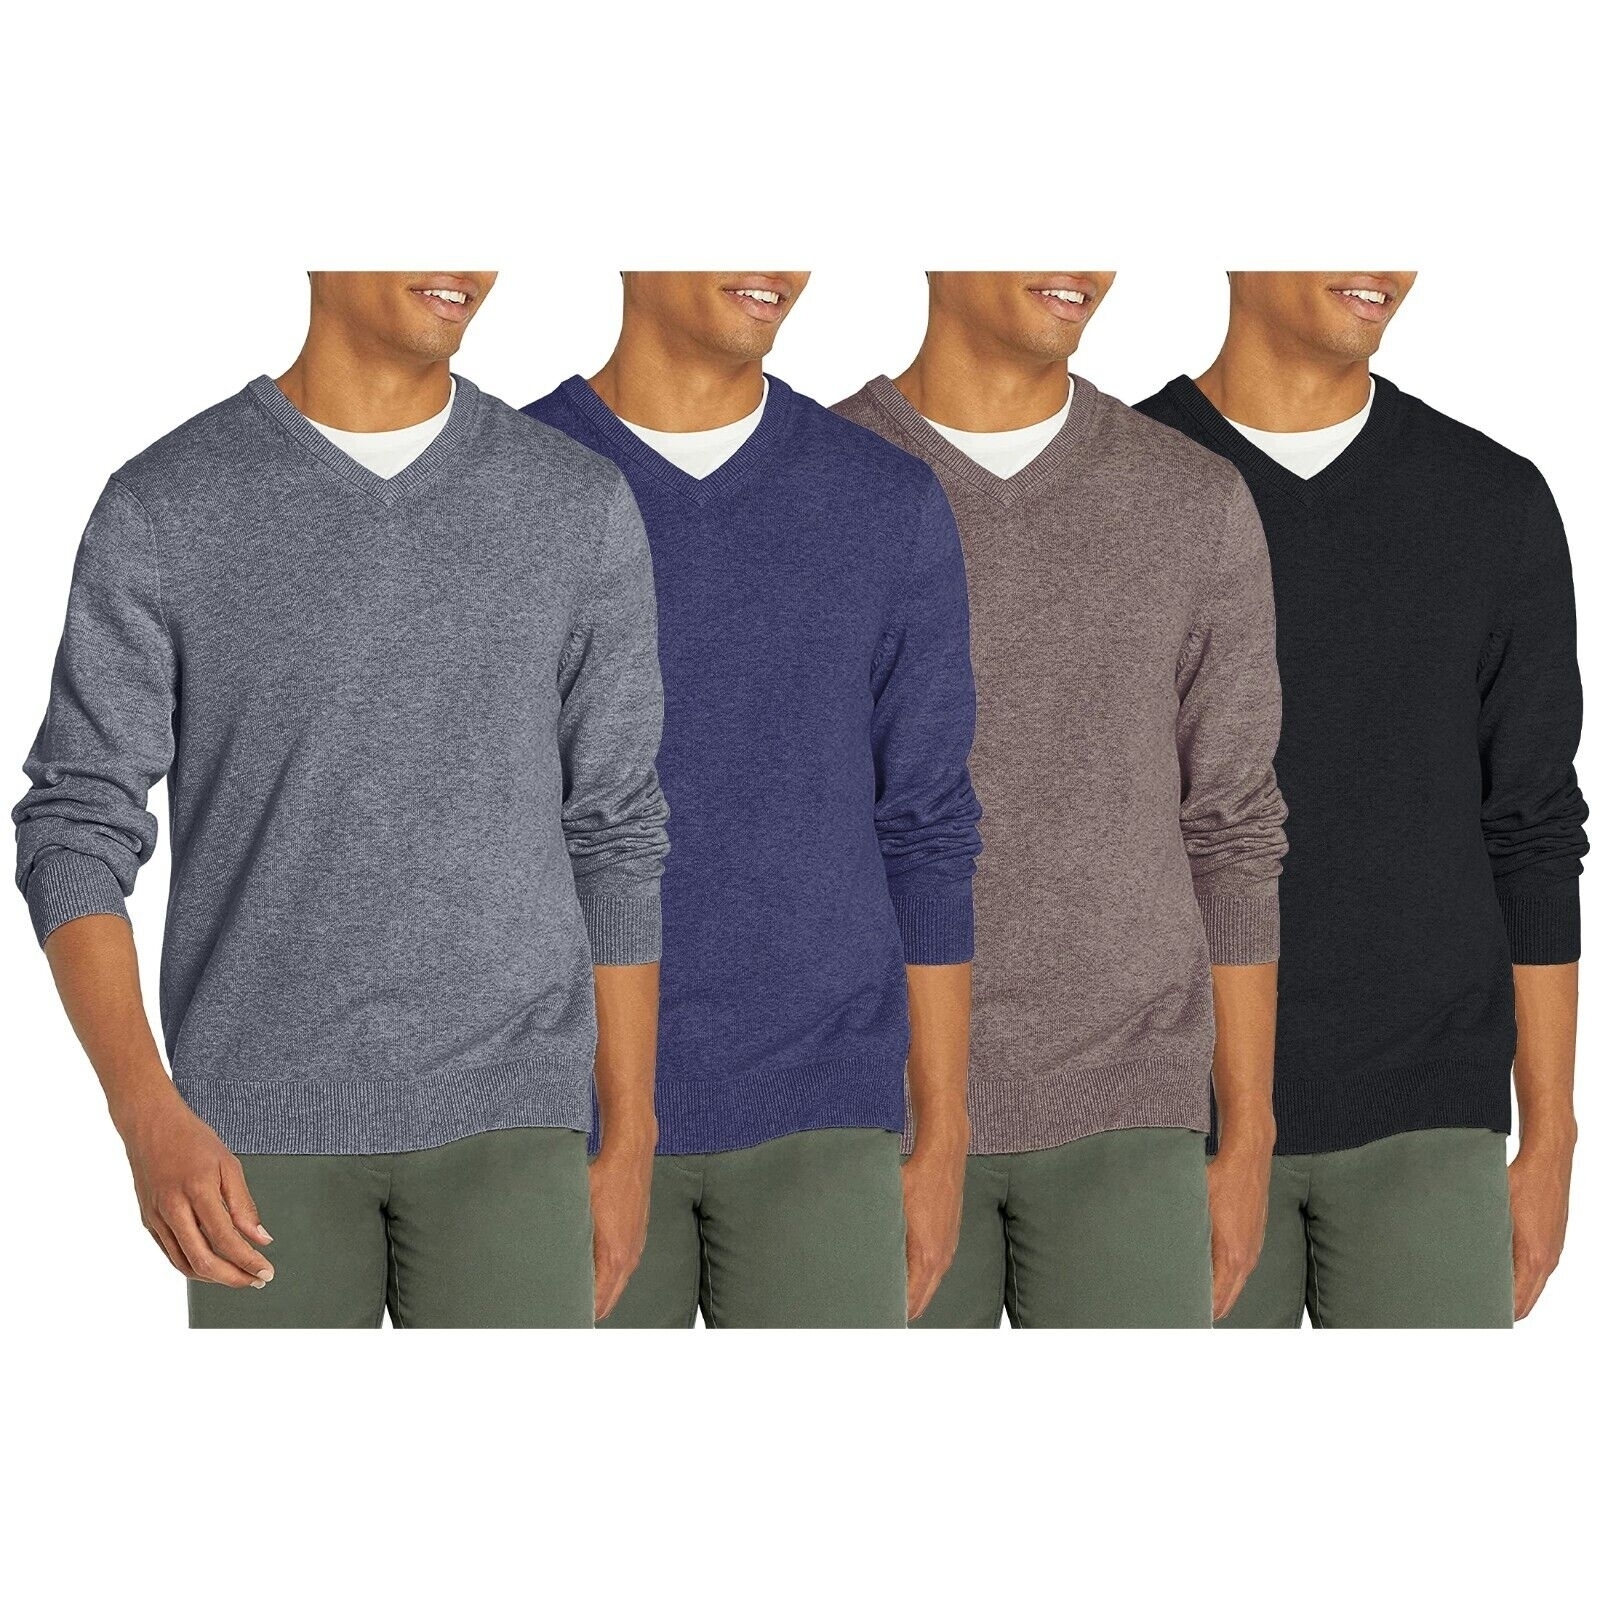 2-Pack Men's Casual Cozy Ultra Soft Slim Fit Warm Knit Pullover V-Neck Sweater - Black&Brown, Medium